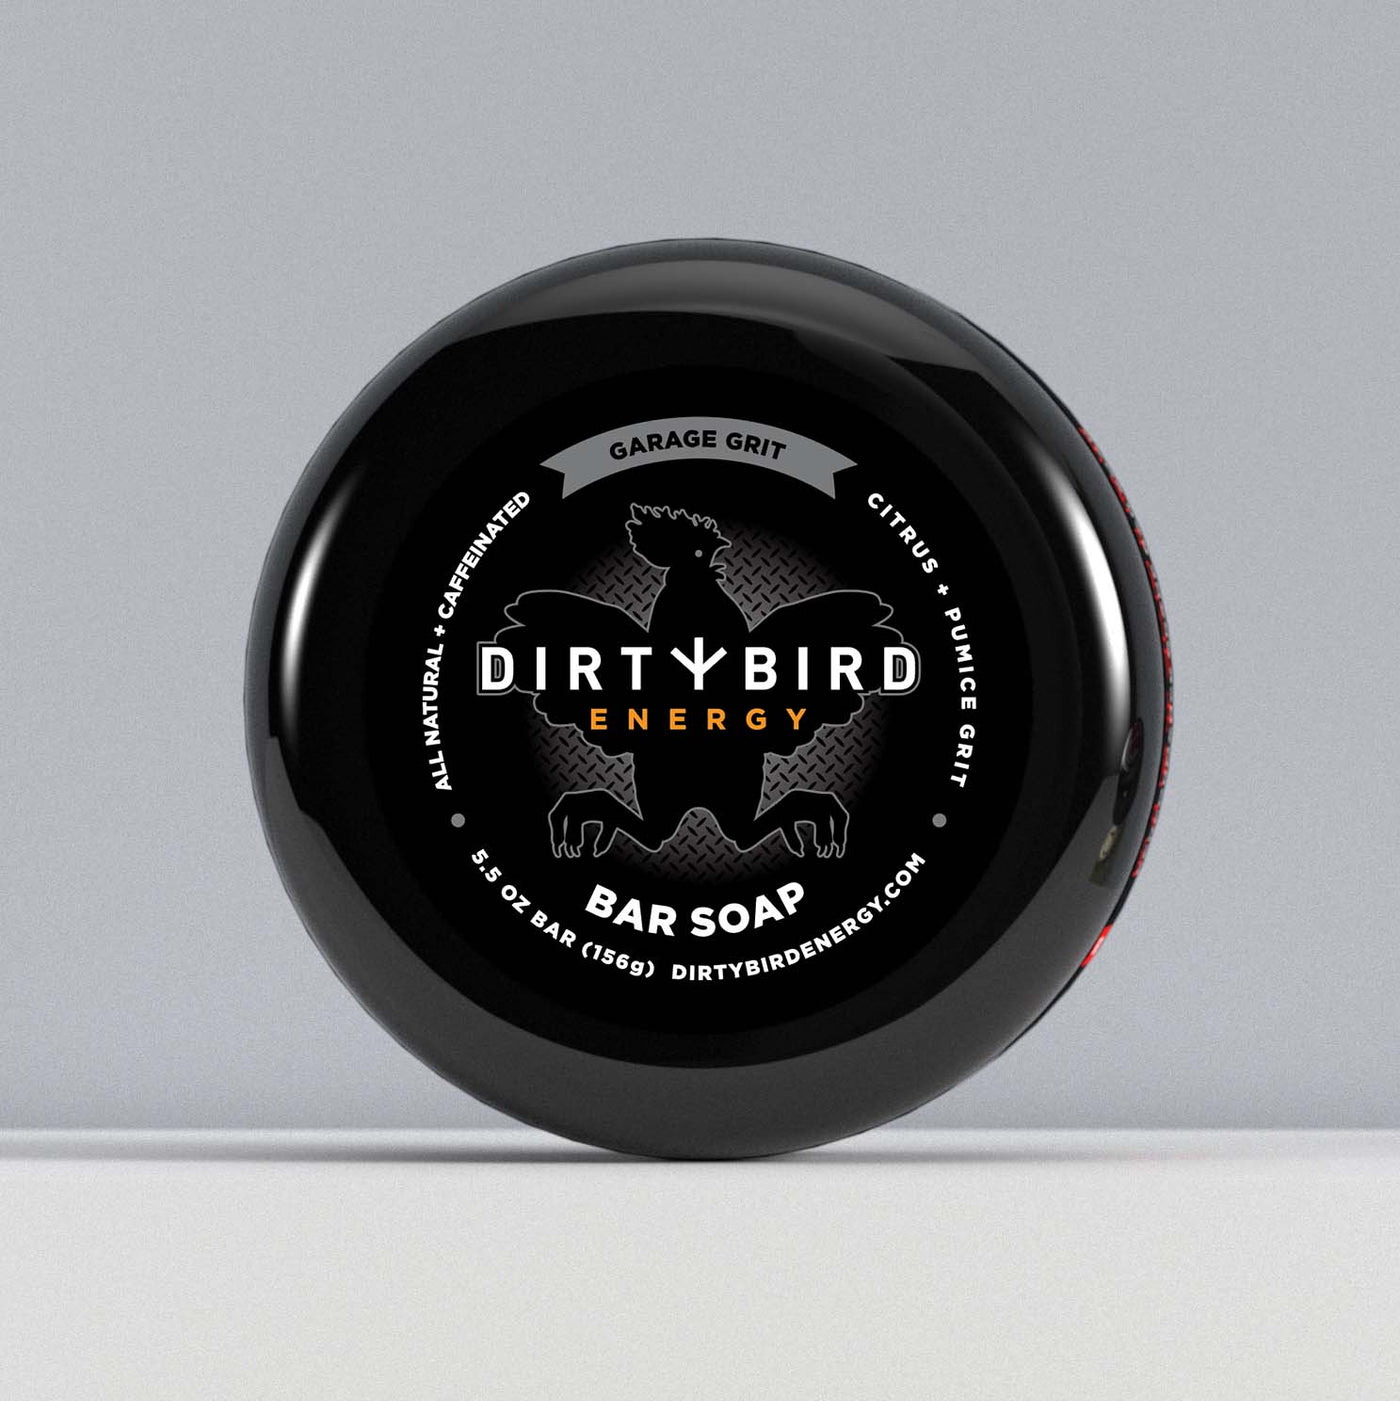 Dirtybird Energy Garage Grit Gift Pack Gift Pack